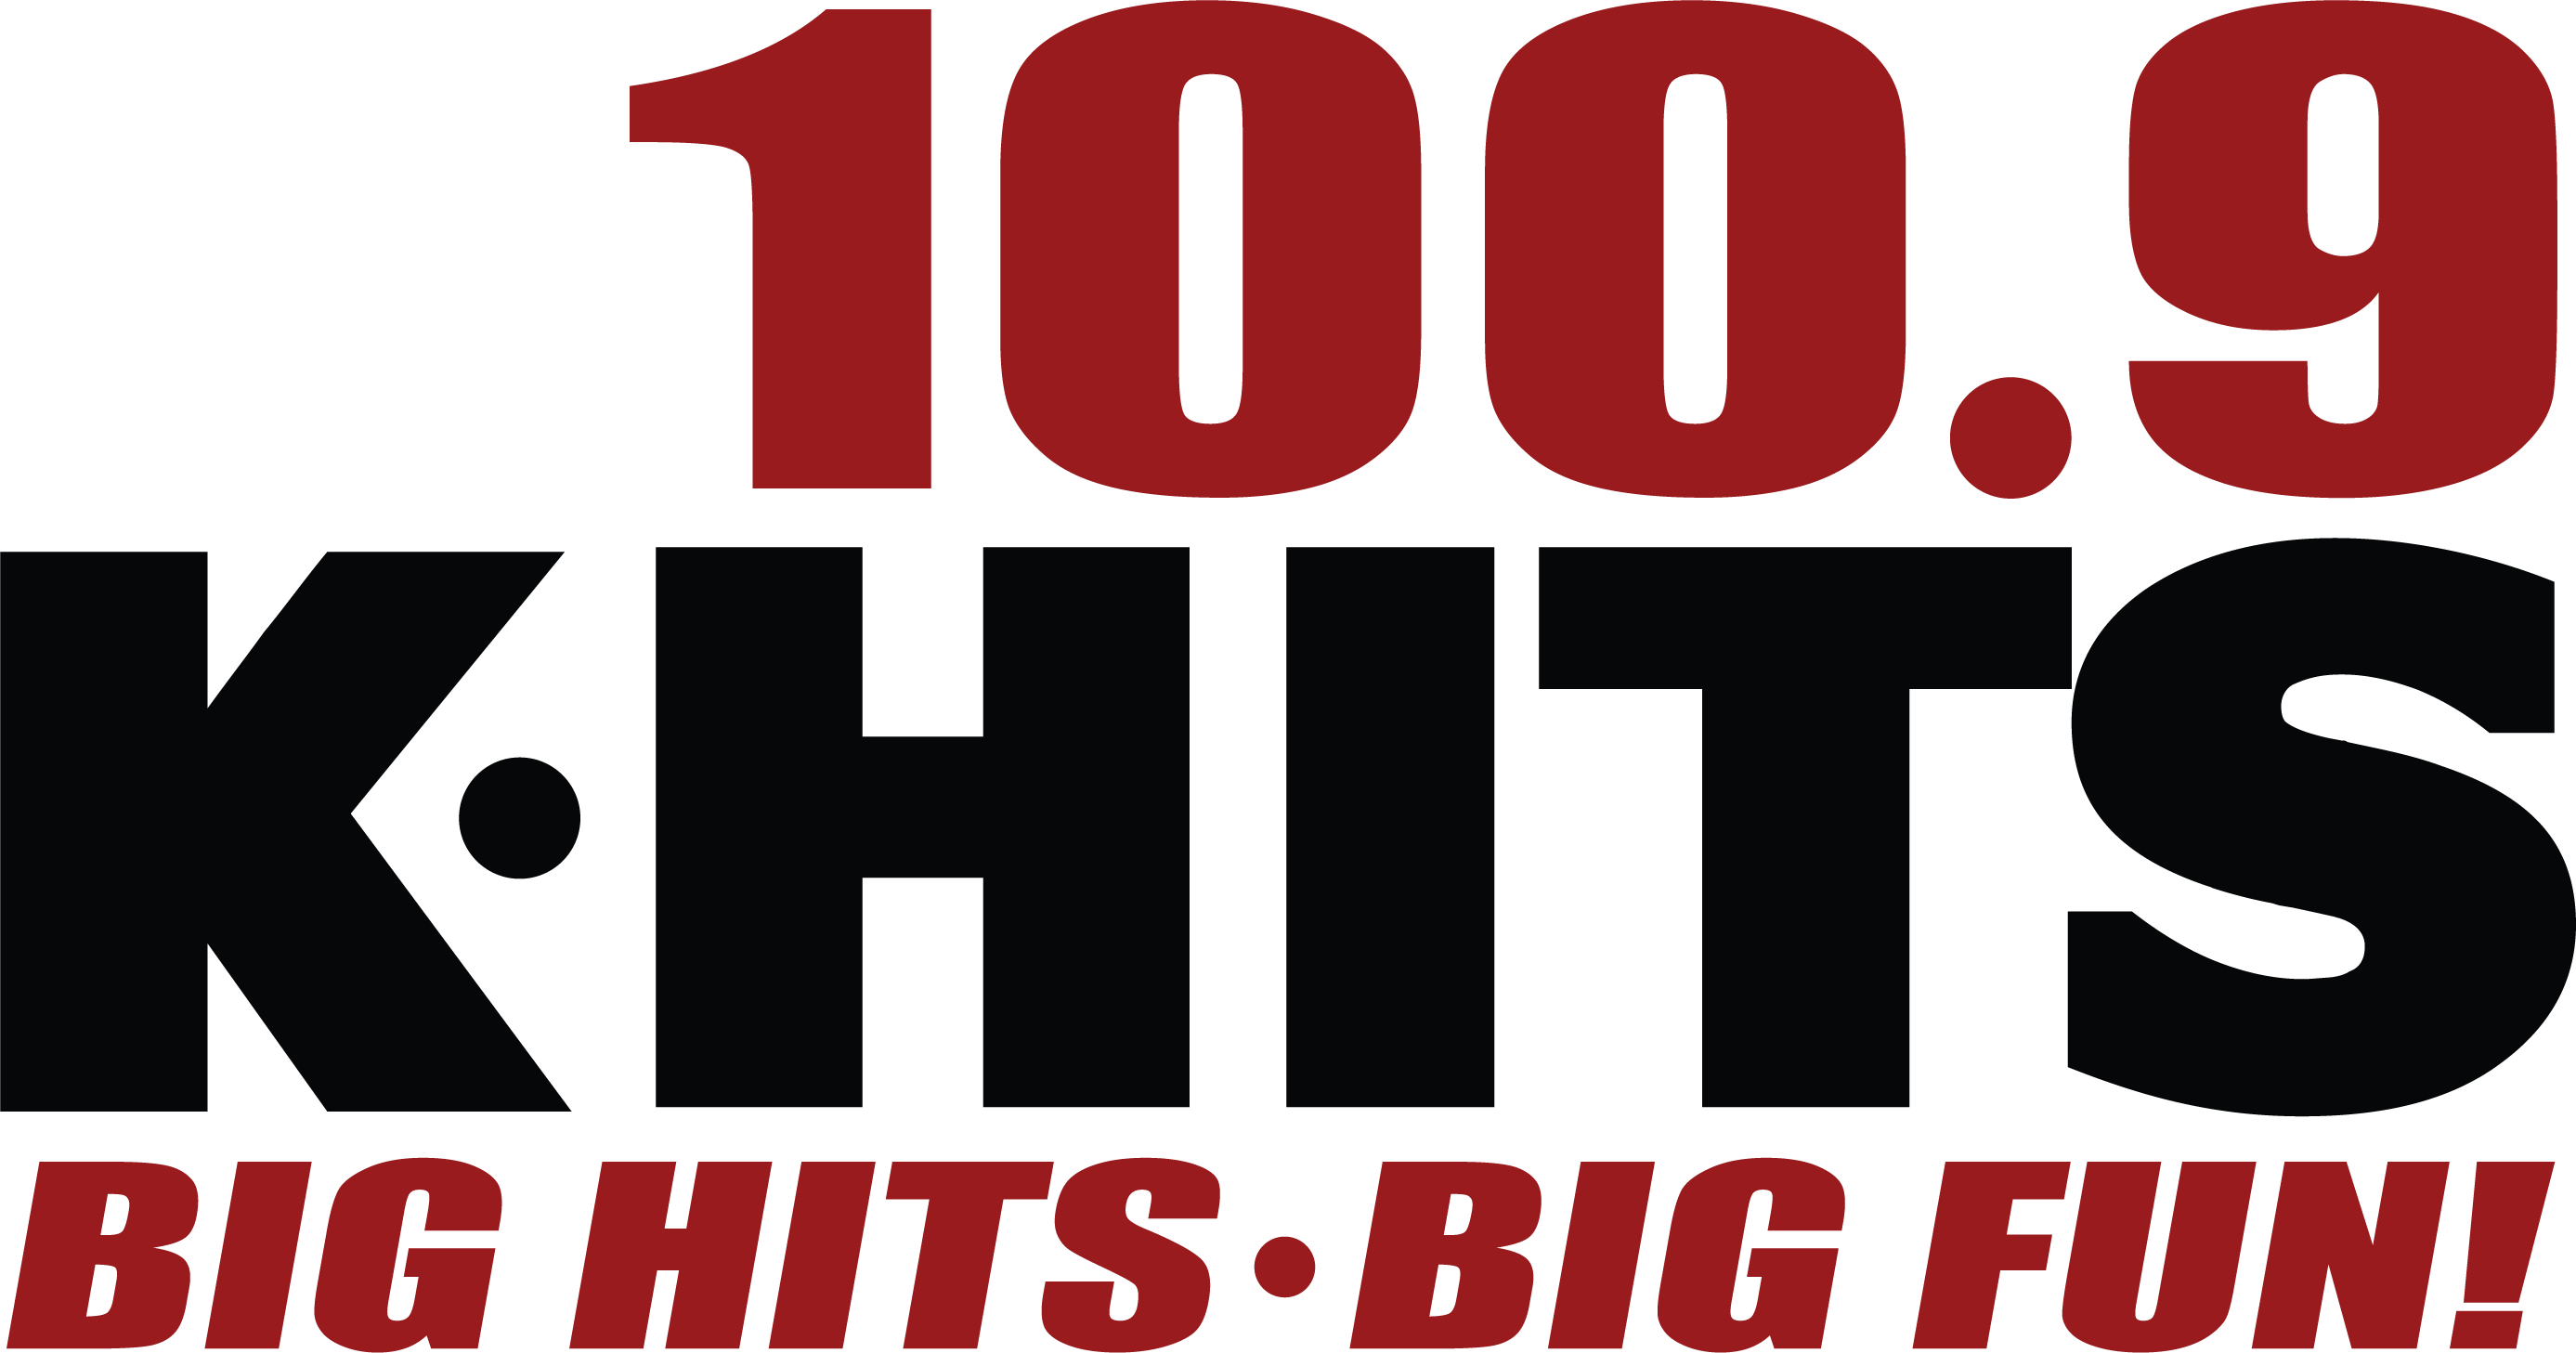 Big Hits Big Fun - 100.9 K Hits (2774x1457), Png Download